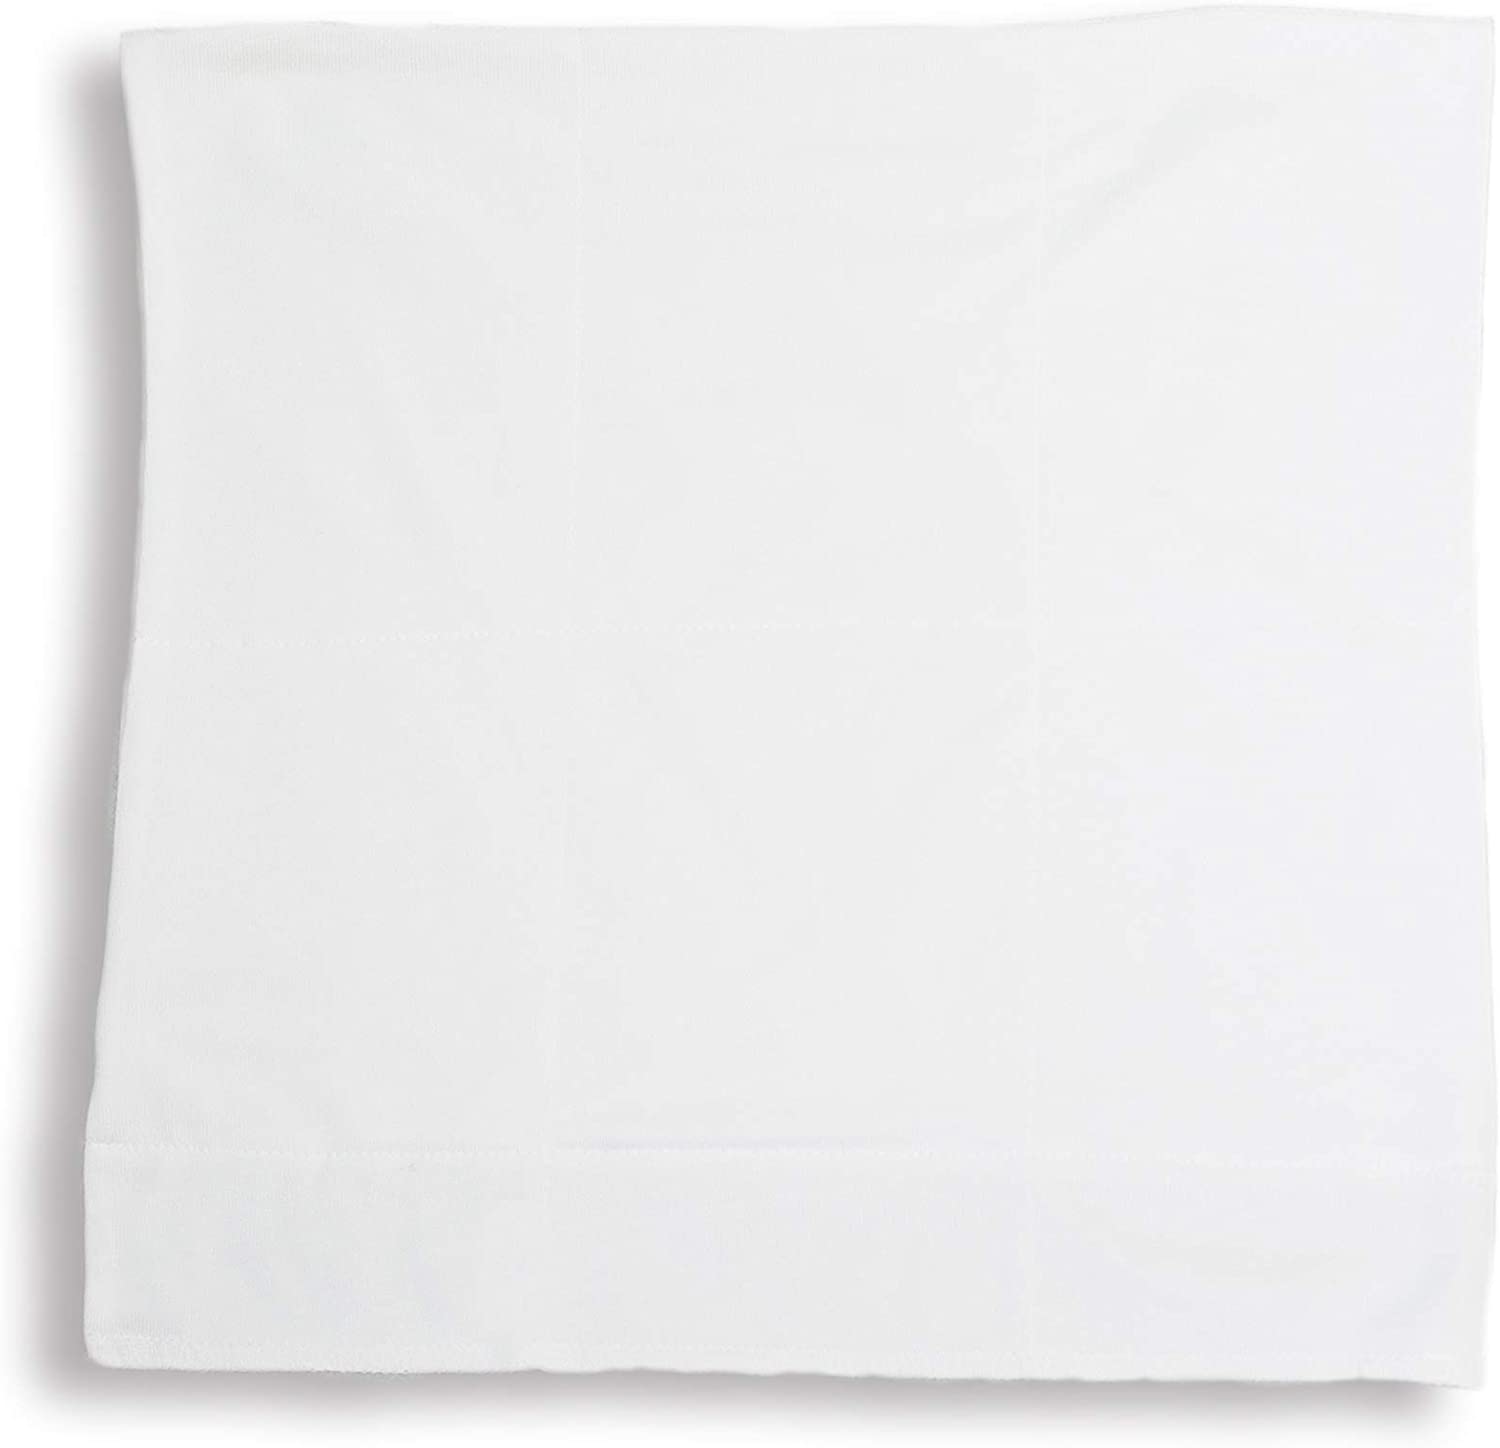 Thirsties Duo Hemp/Organic Cotton Cloth Diaper Prefold, Size One, 2 Pack